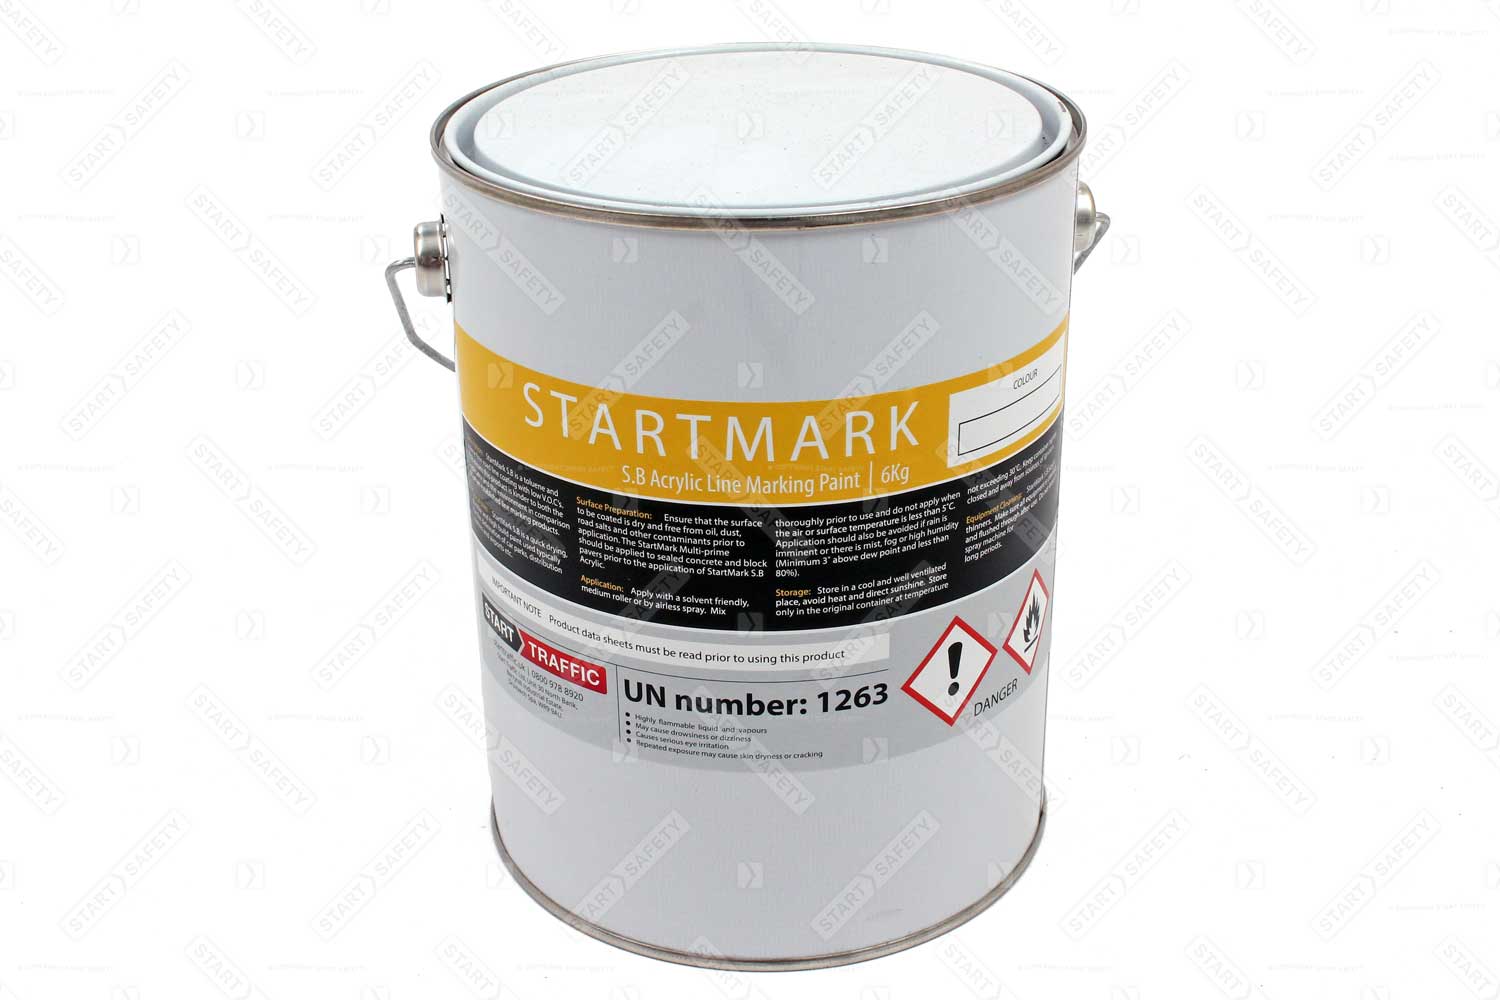 Tub of Startmark Line Marking Paint